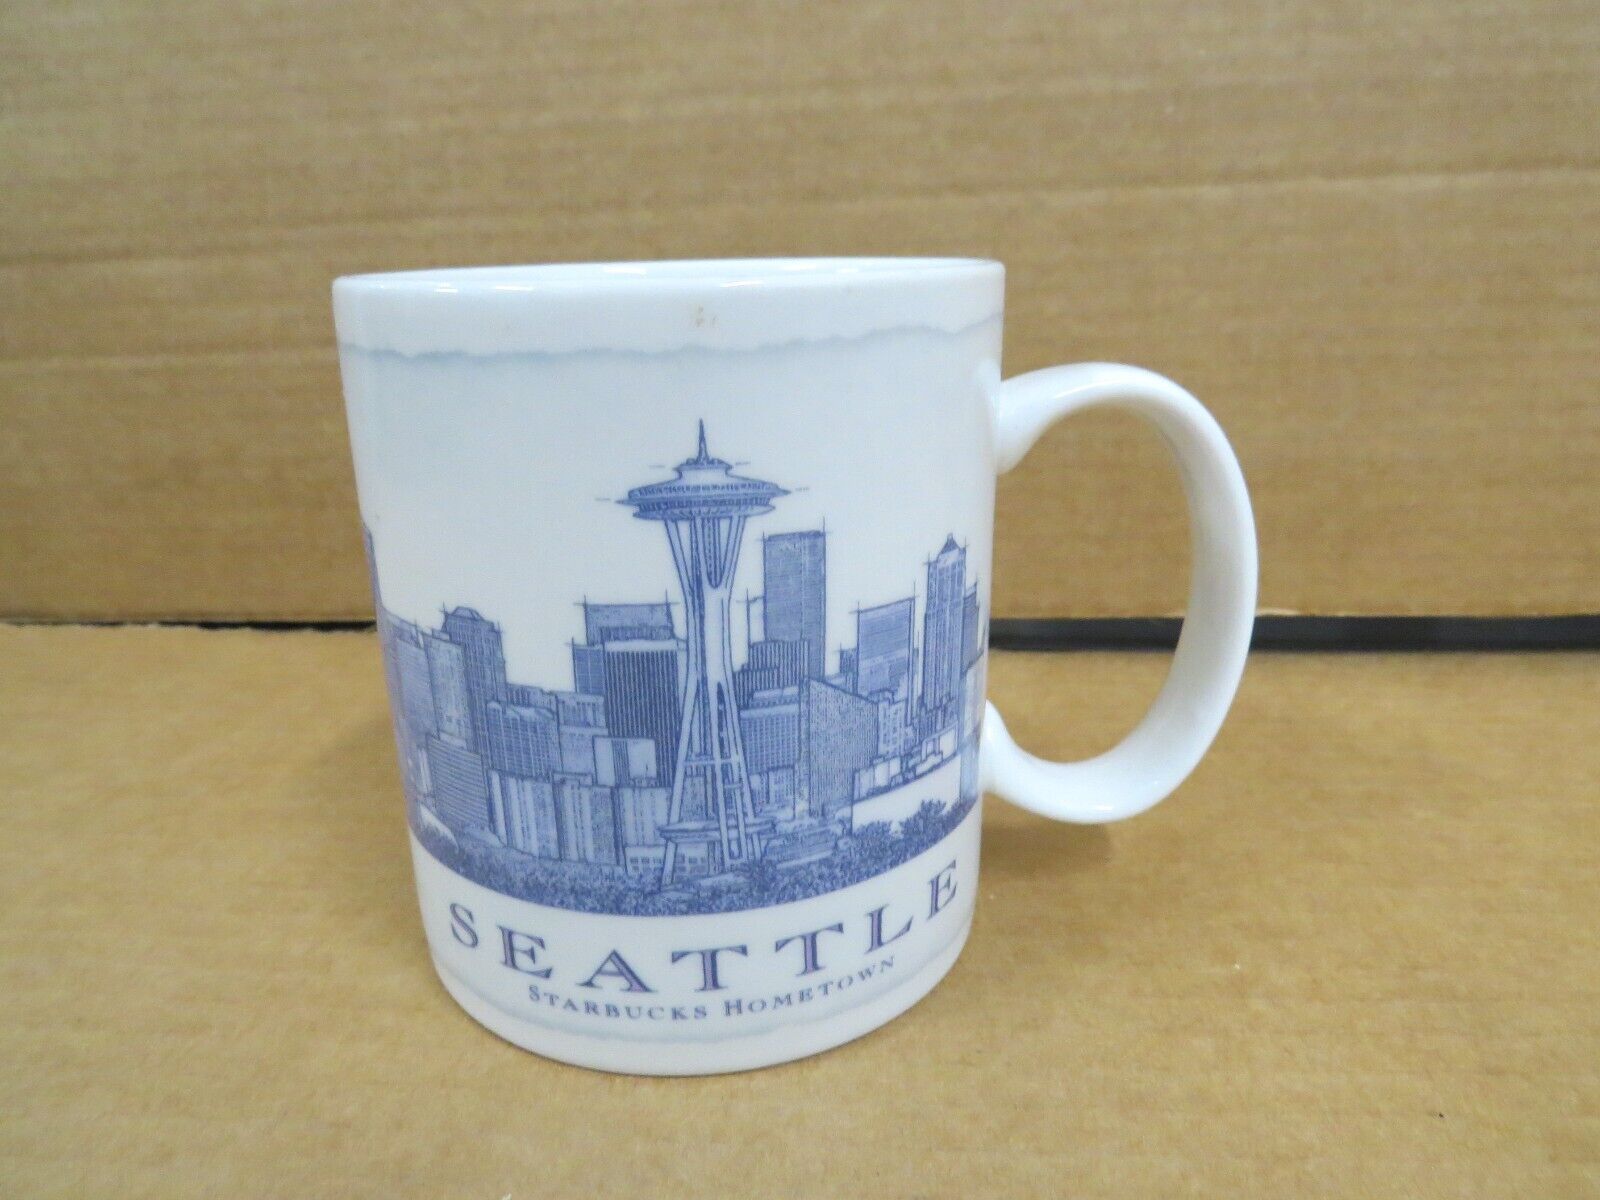 Starbucks Hometown Coffee Cup Architecture Series City Mug Seattle 2007 18Oz WA